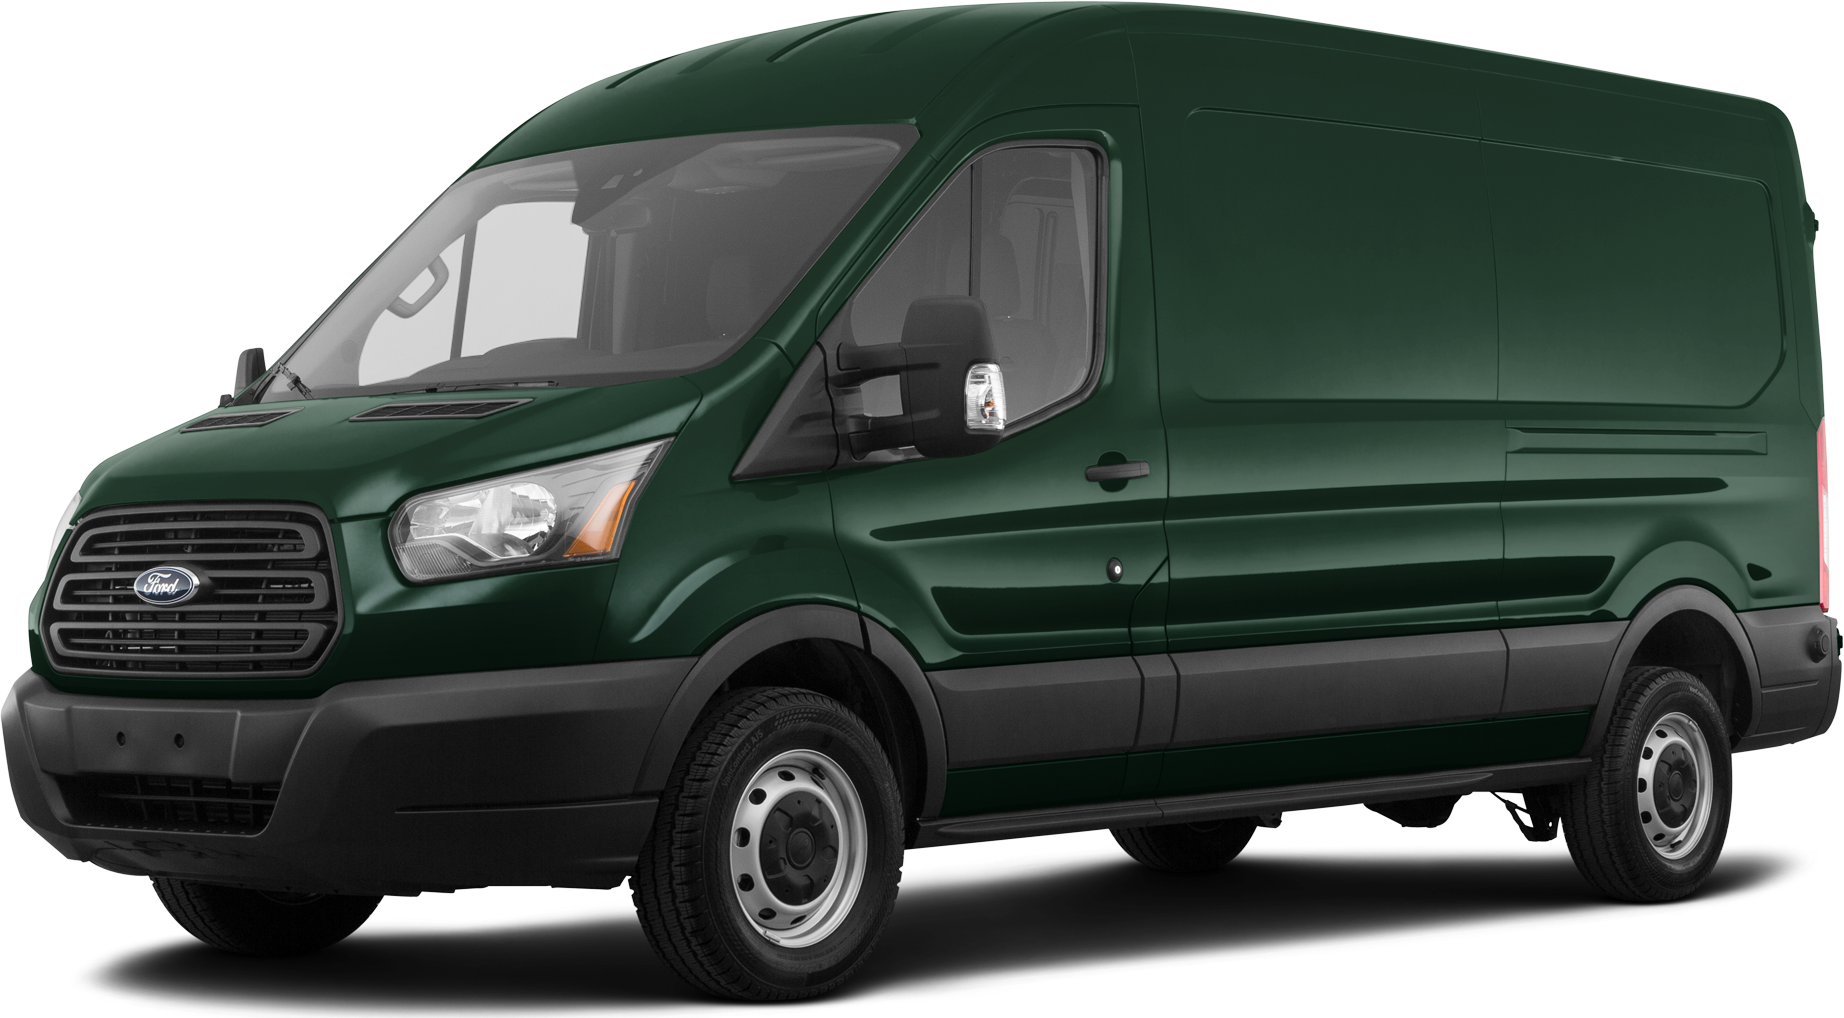 2020 Ford Transit 250 Cargo Van Price, Value, Ratings & Reviews